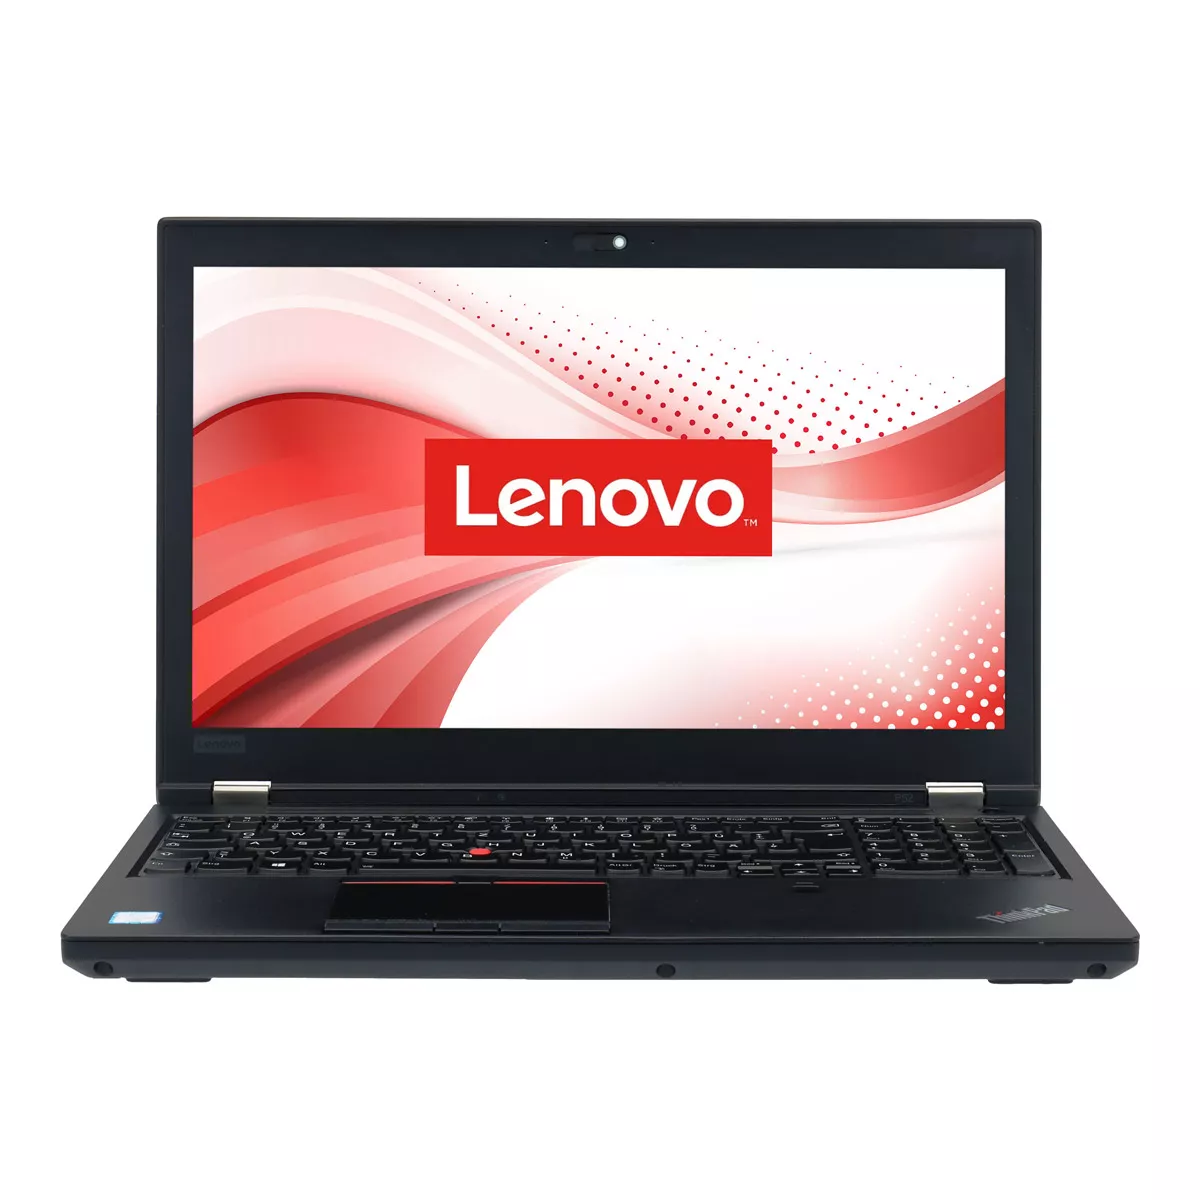 Lenovo ThinkPad P52 Core i7 8750H Full-HD nVidia Quadro P1000M 500 GB M.2 SSD Webcam A+